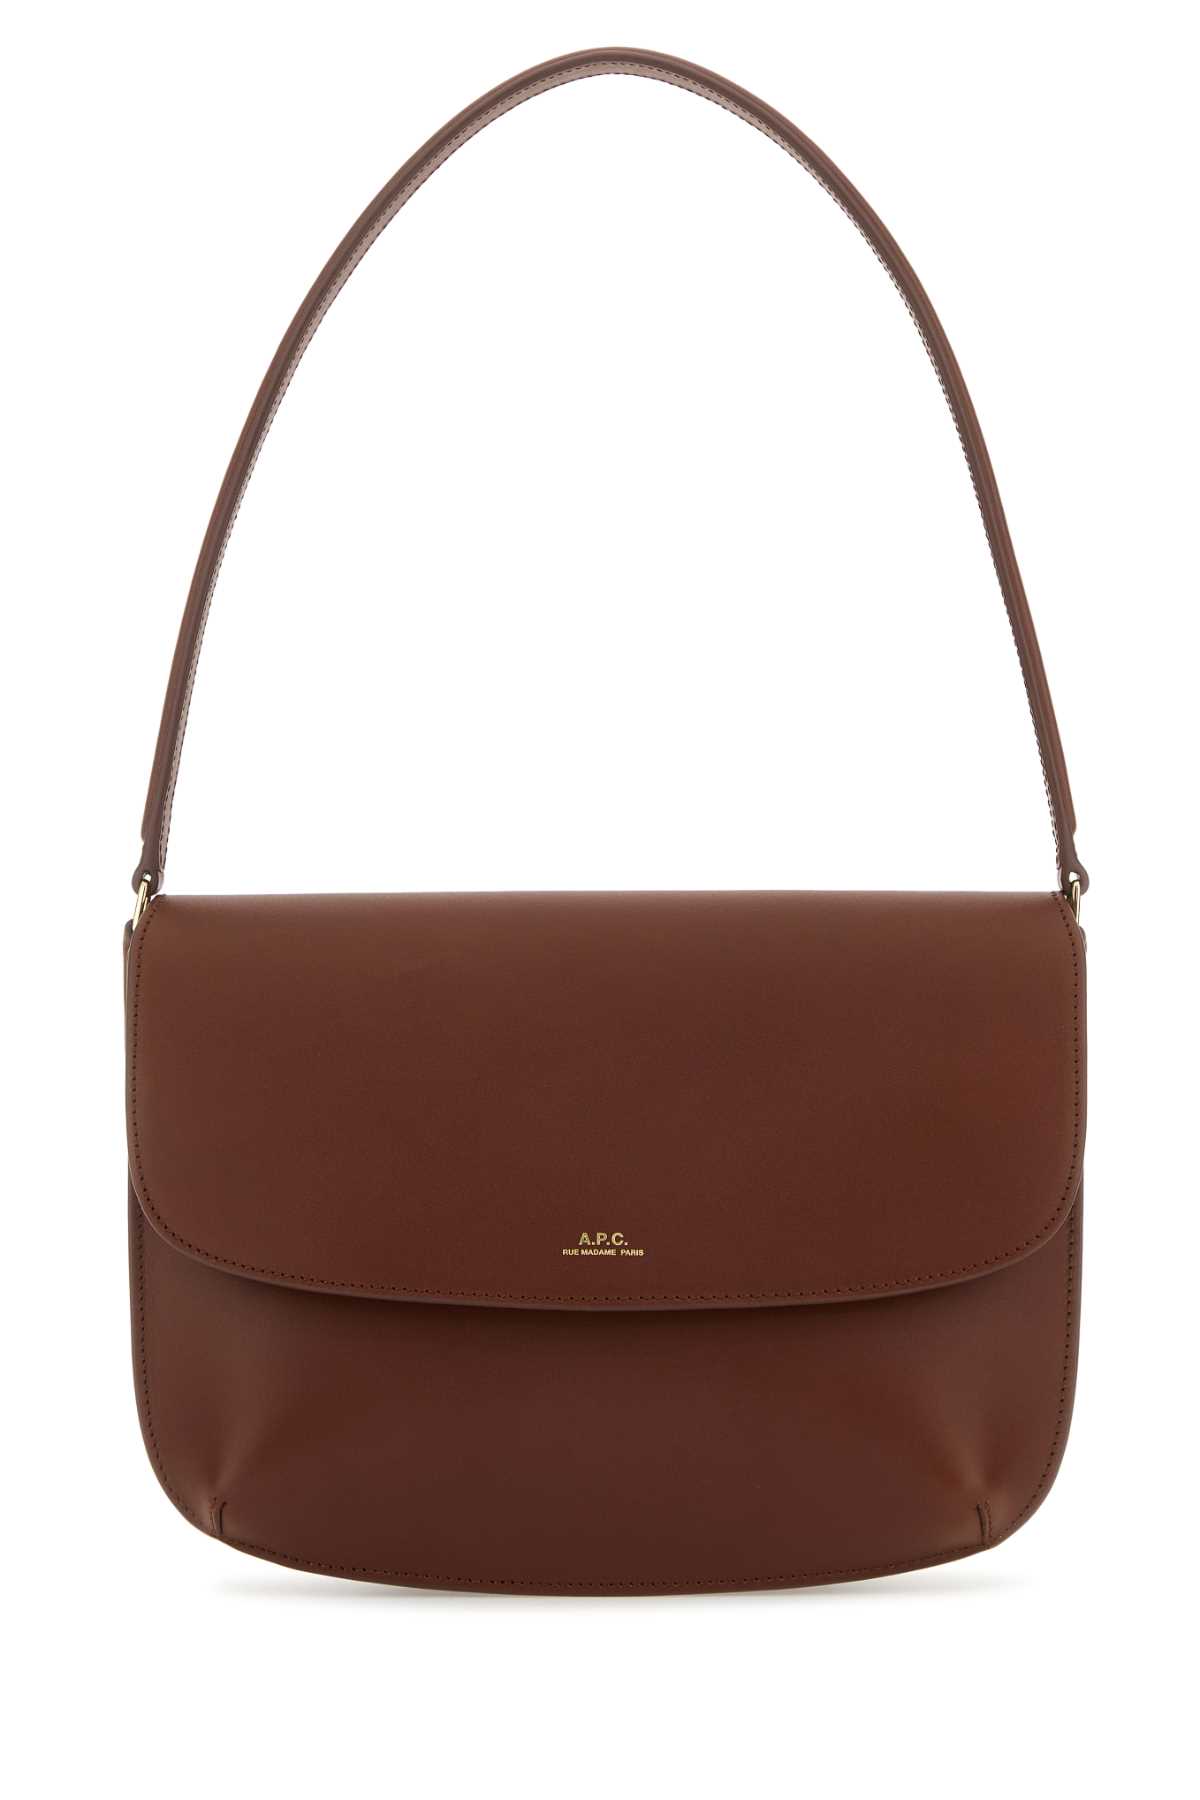 Apc Brown Leather Sara Shoulder Bag In Cad